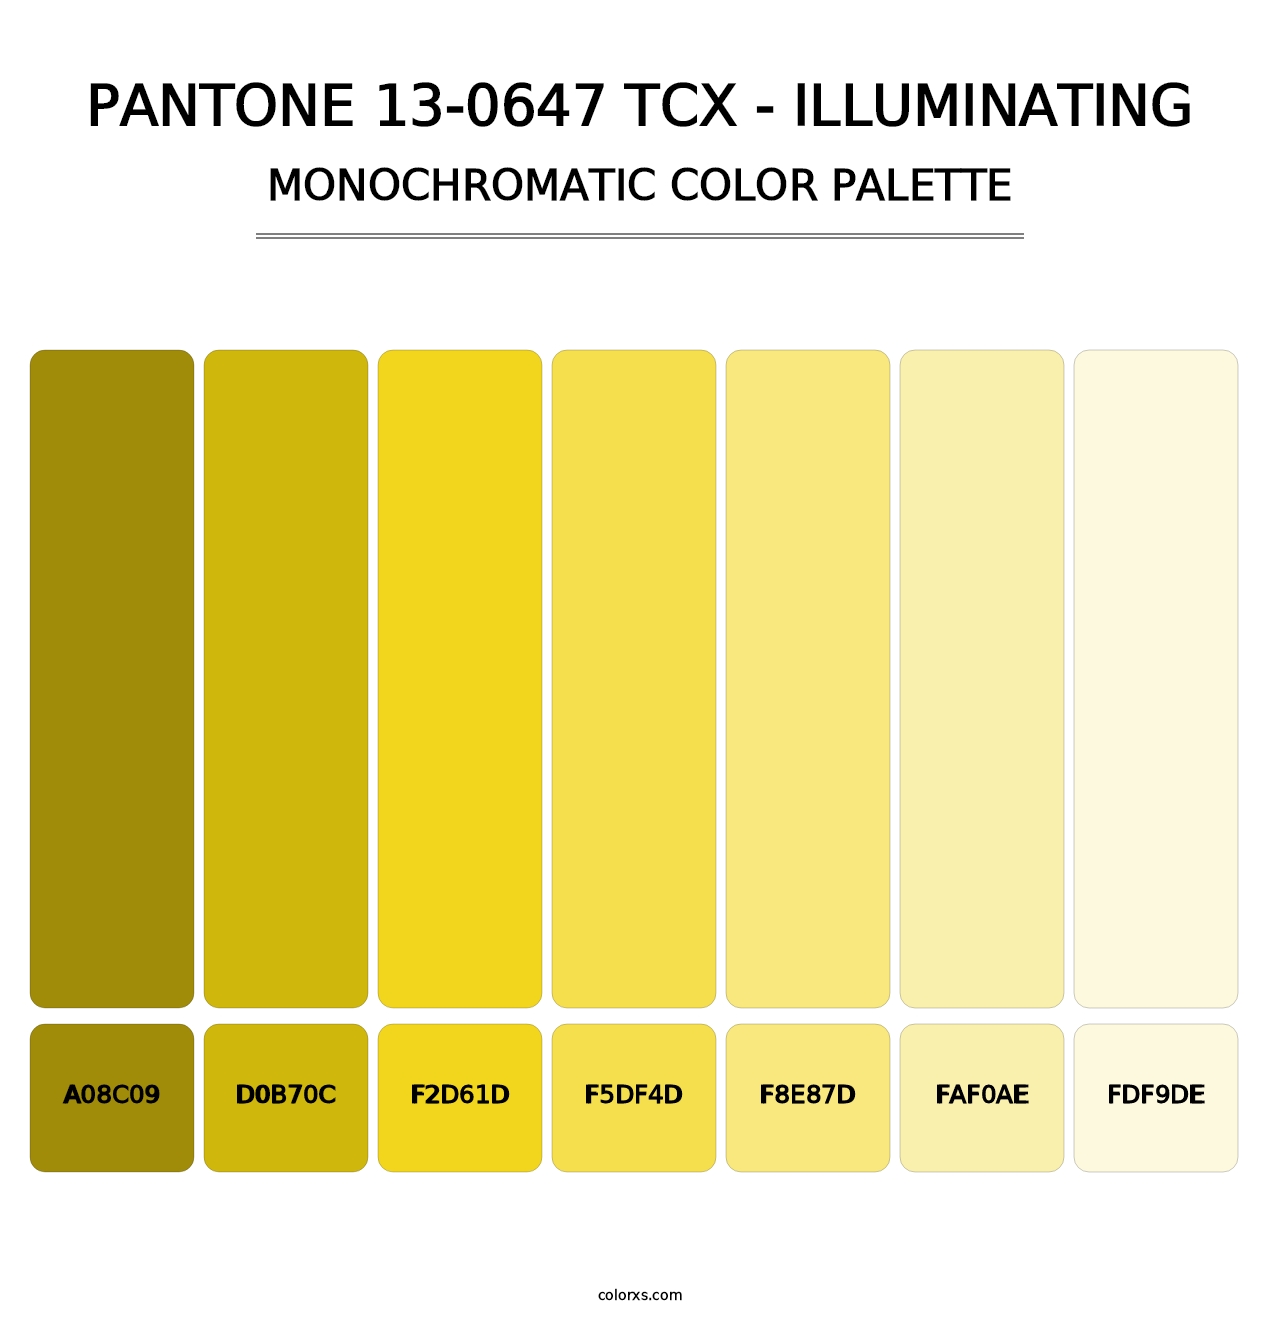 PANTONE 13-0647 TCX - Illuminating - Monochromatic Color Palette